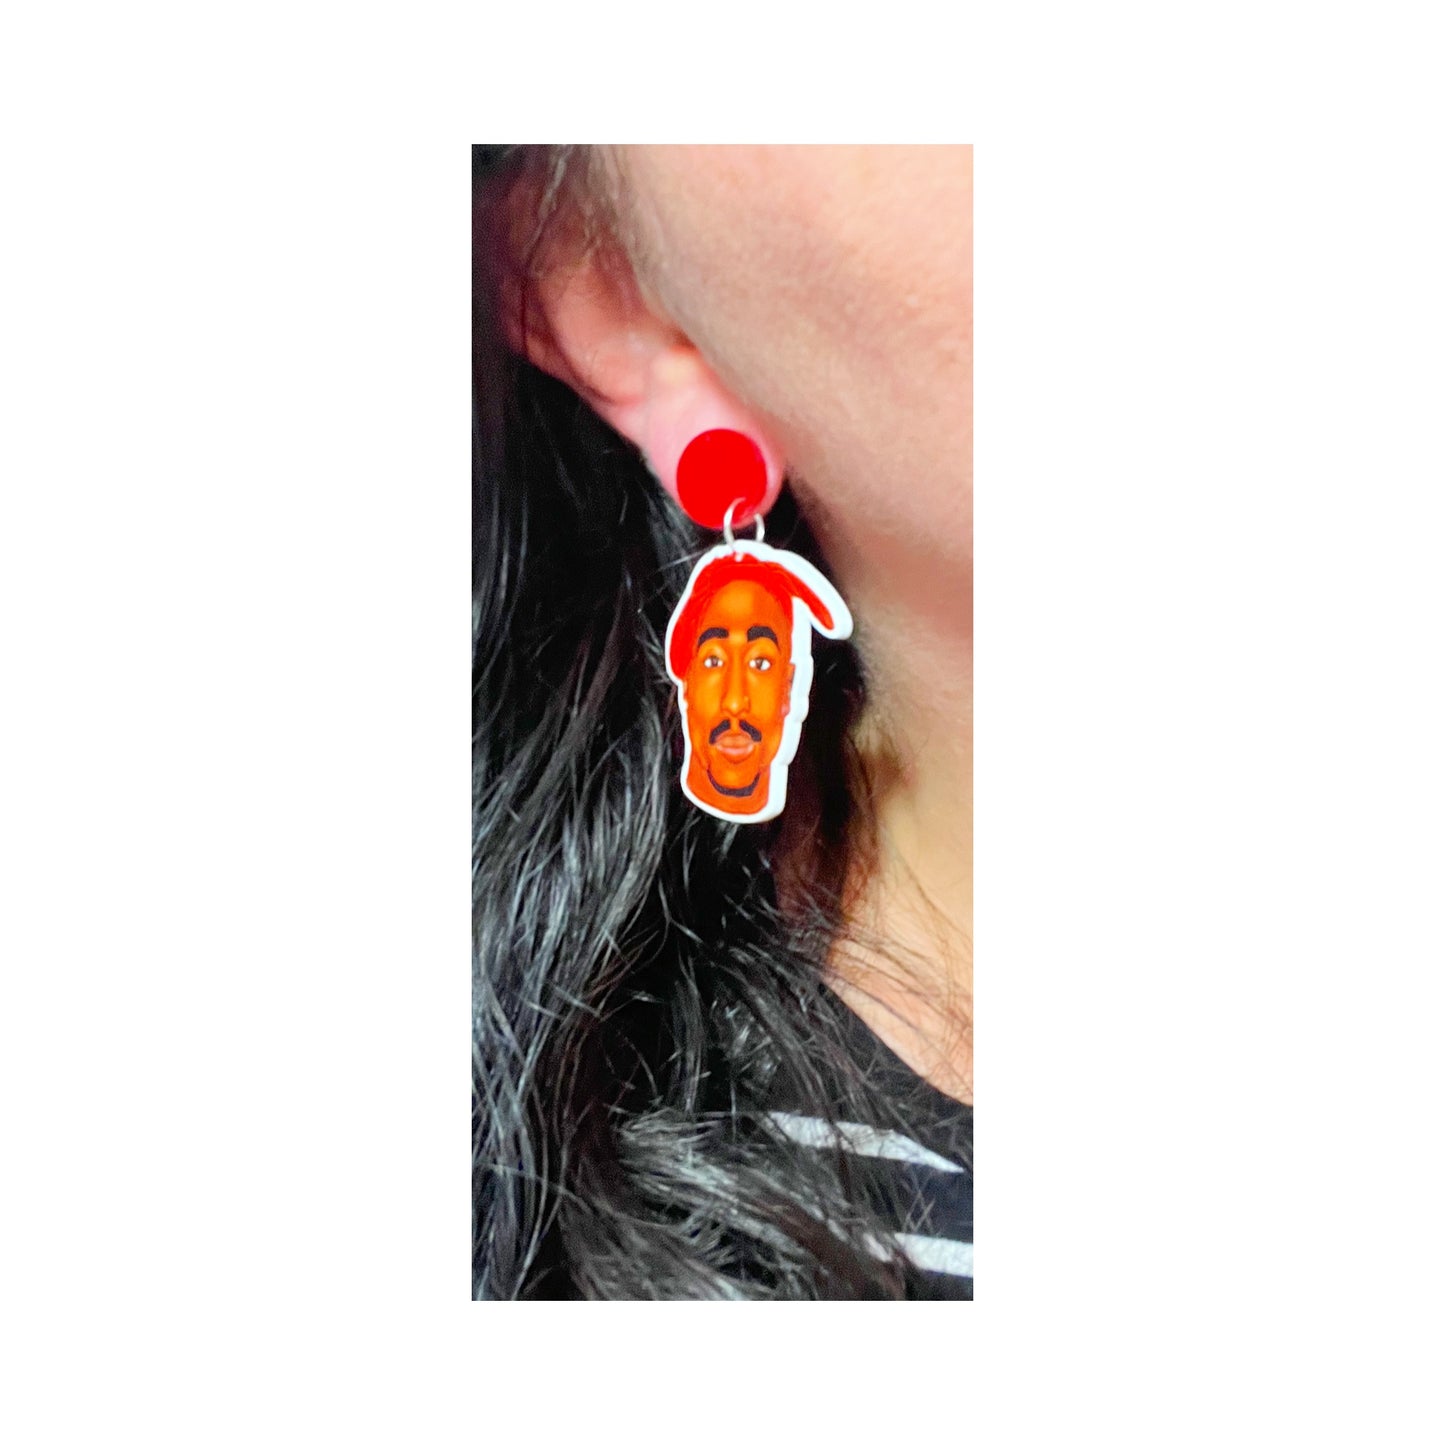 2Pac Acrylic Drop Earrings